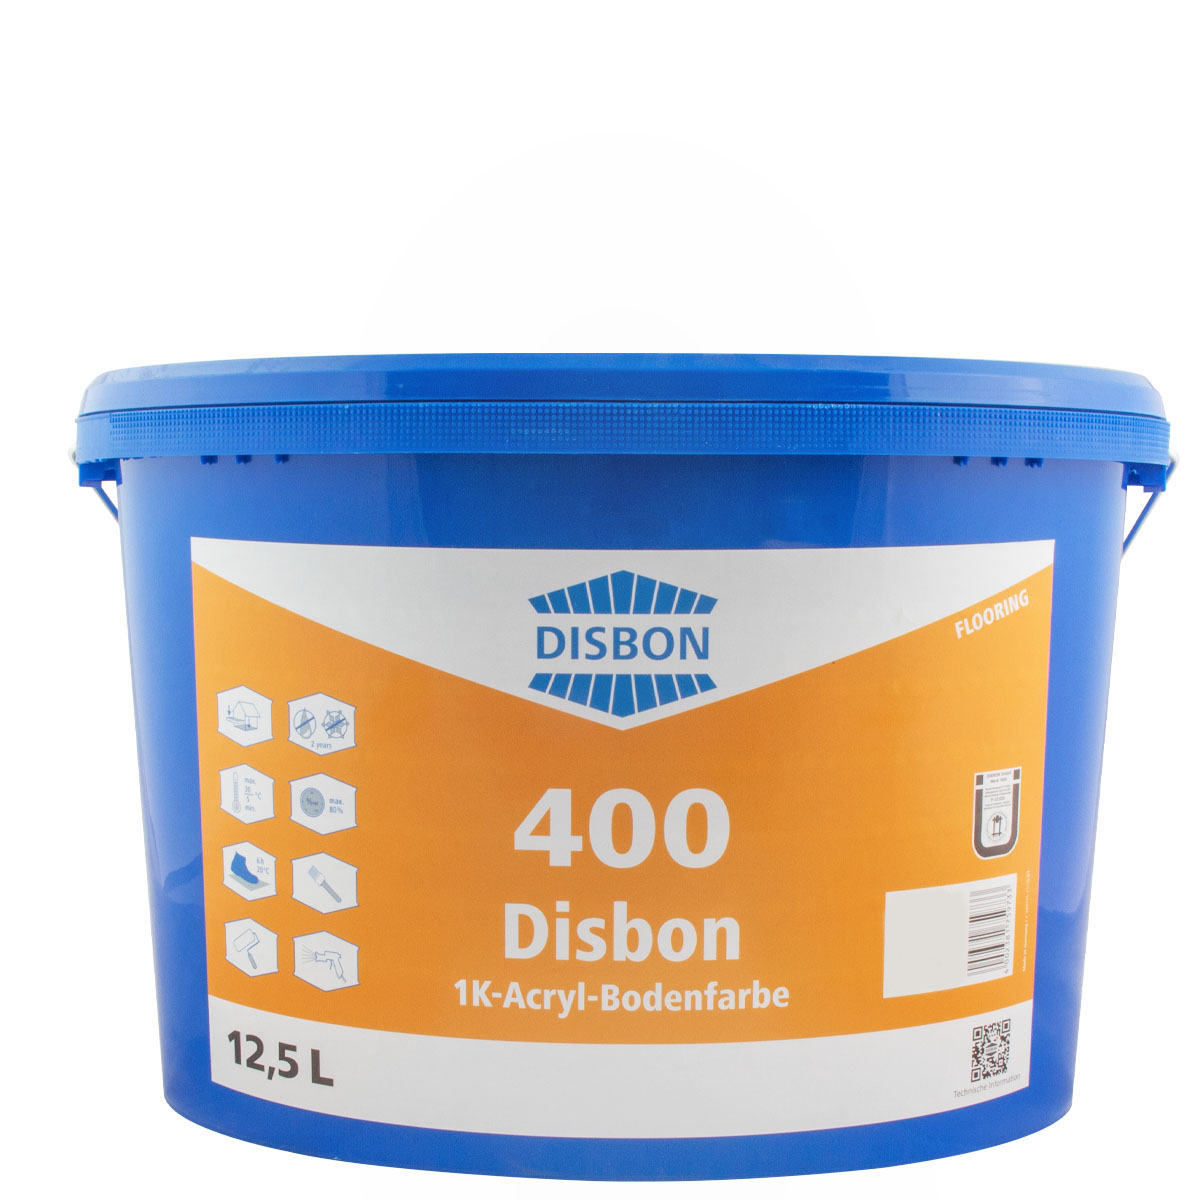 Disbon_400_disbon_12,5l_gross